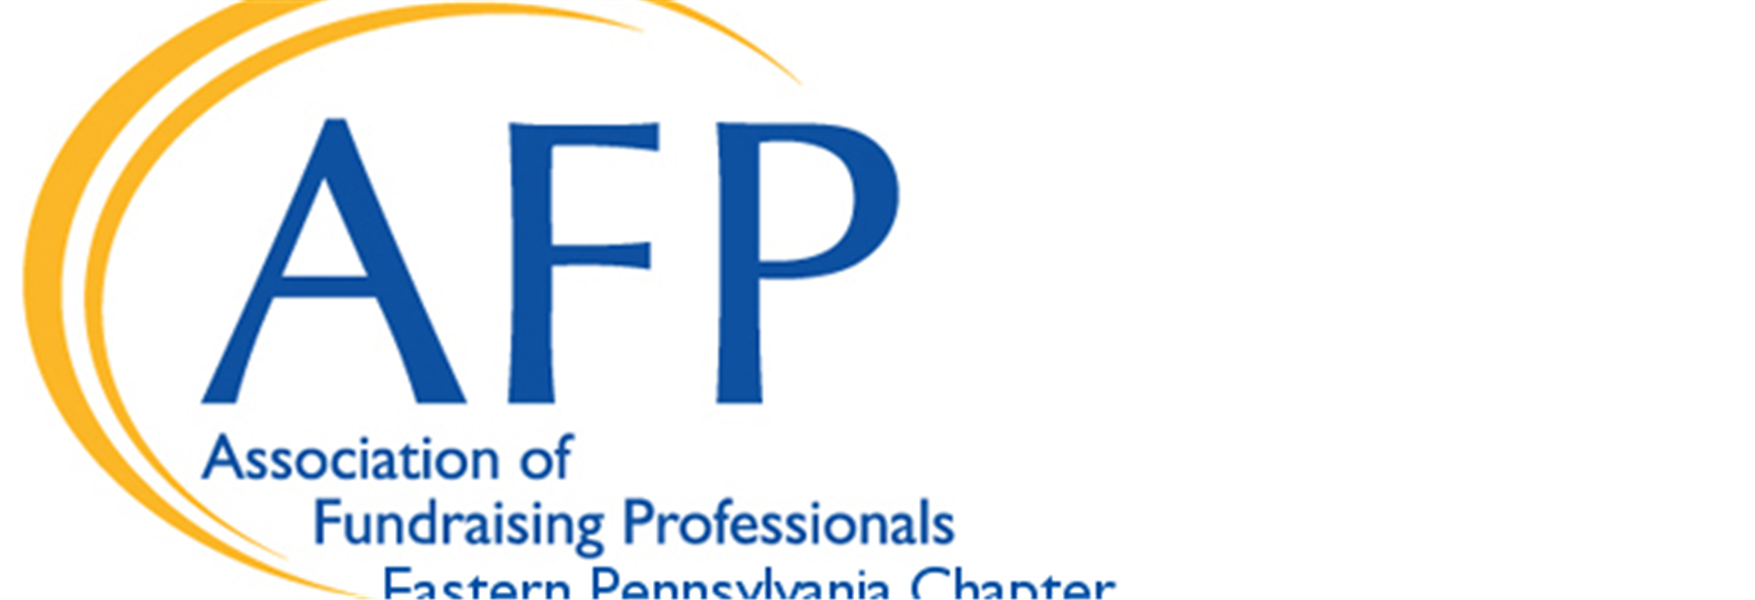 8013f469-9d04-453f-94e5-ca580b9fdb07_AFP - EPA Logo.php.png